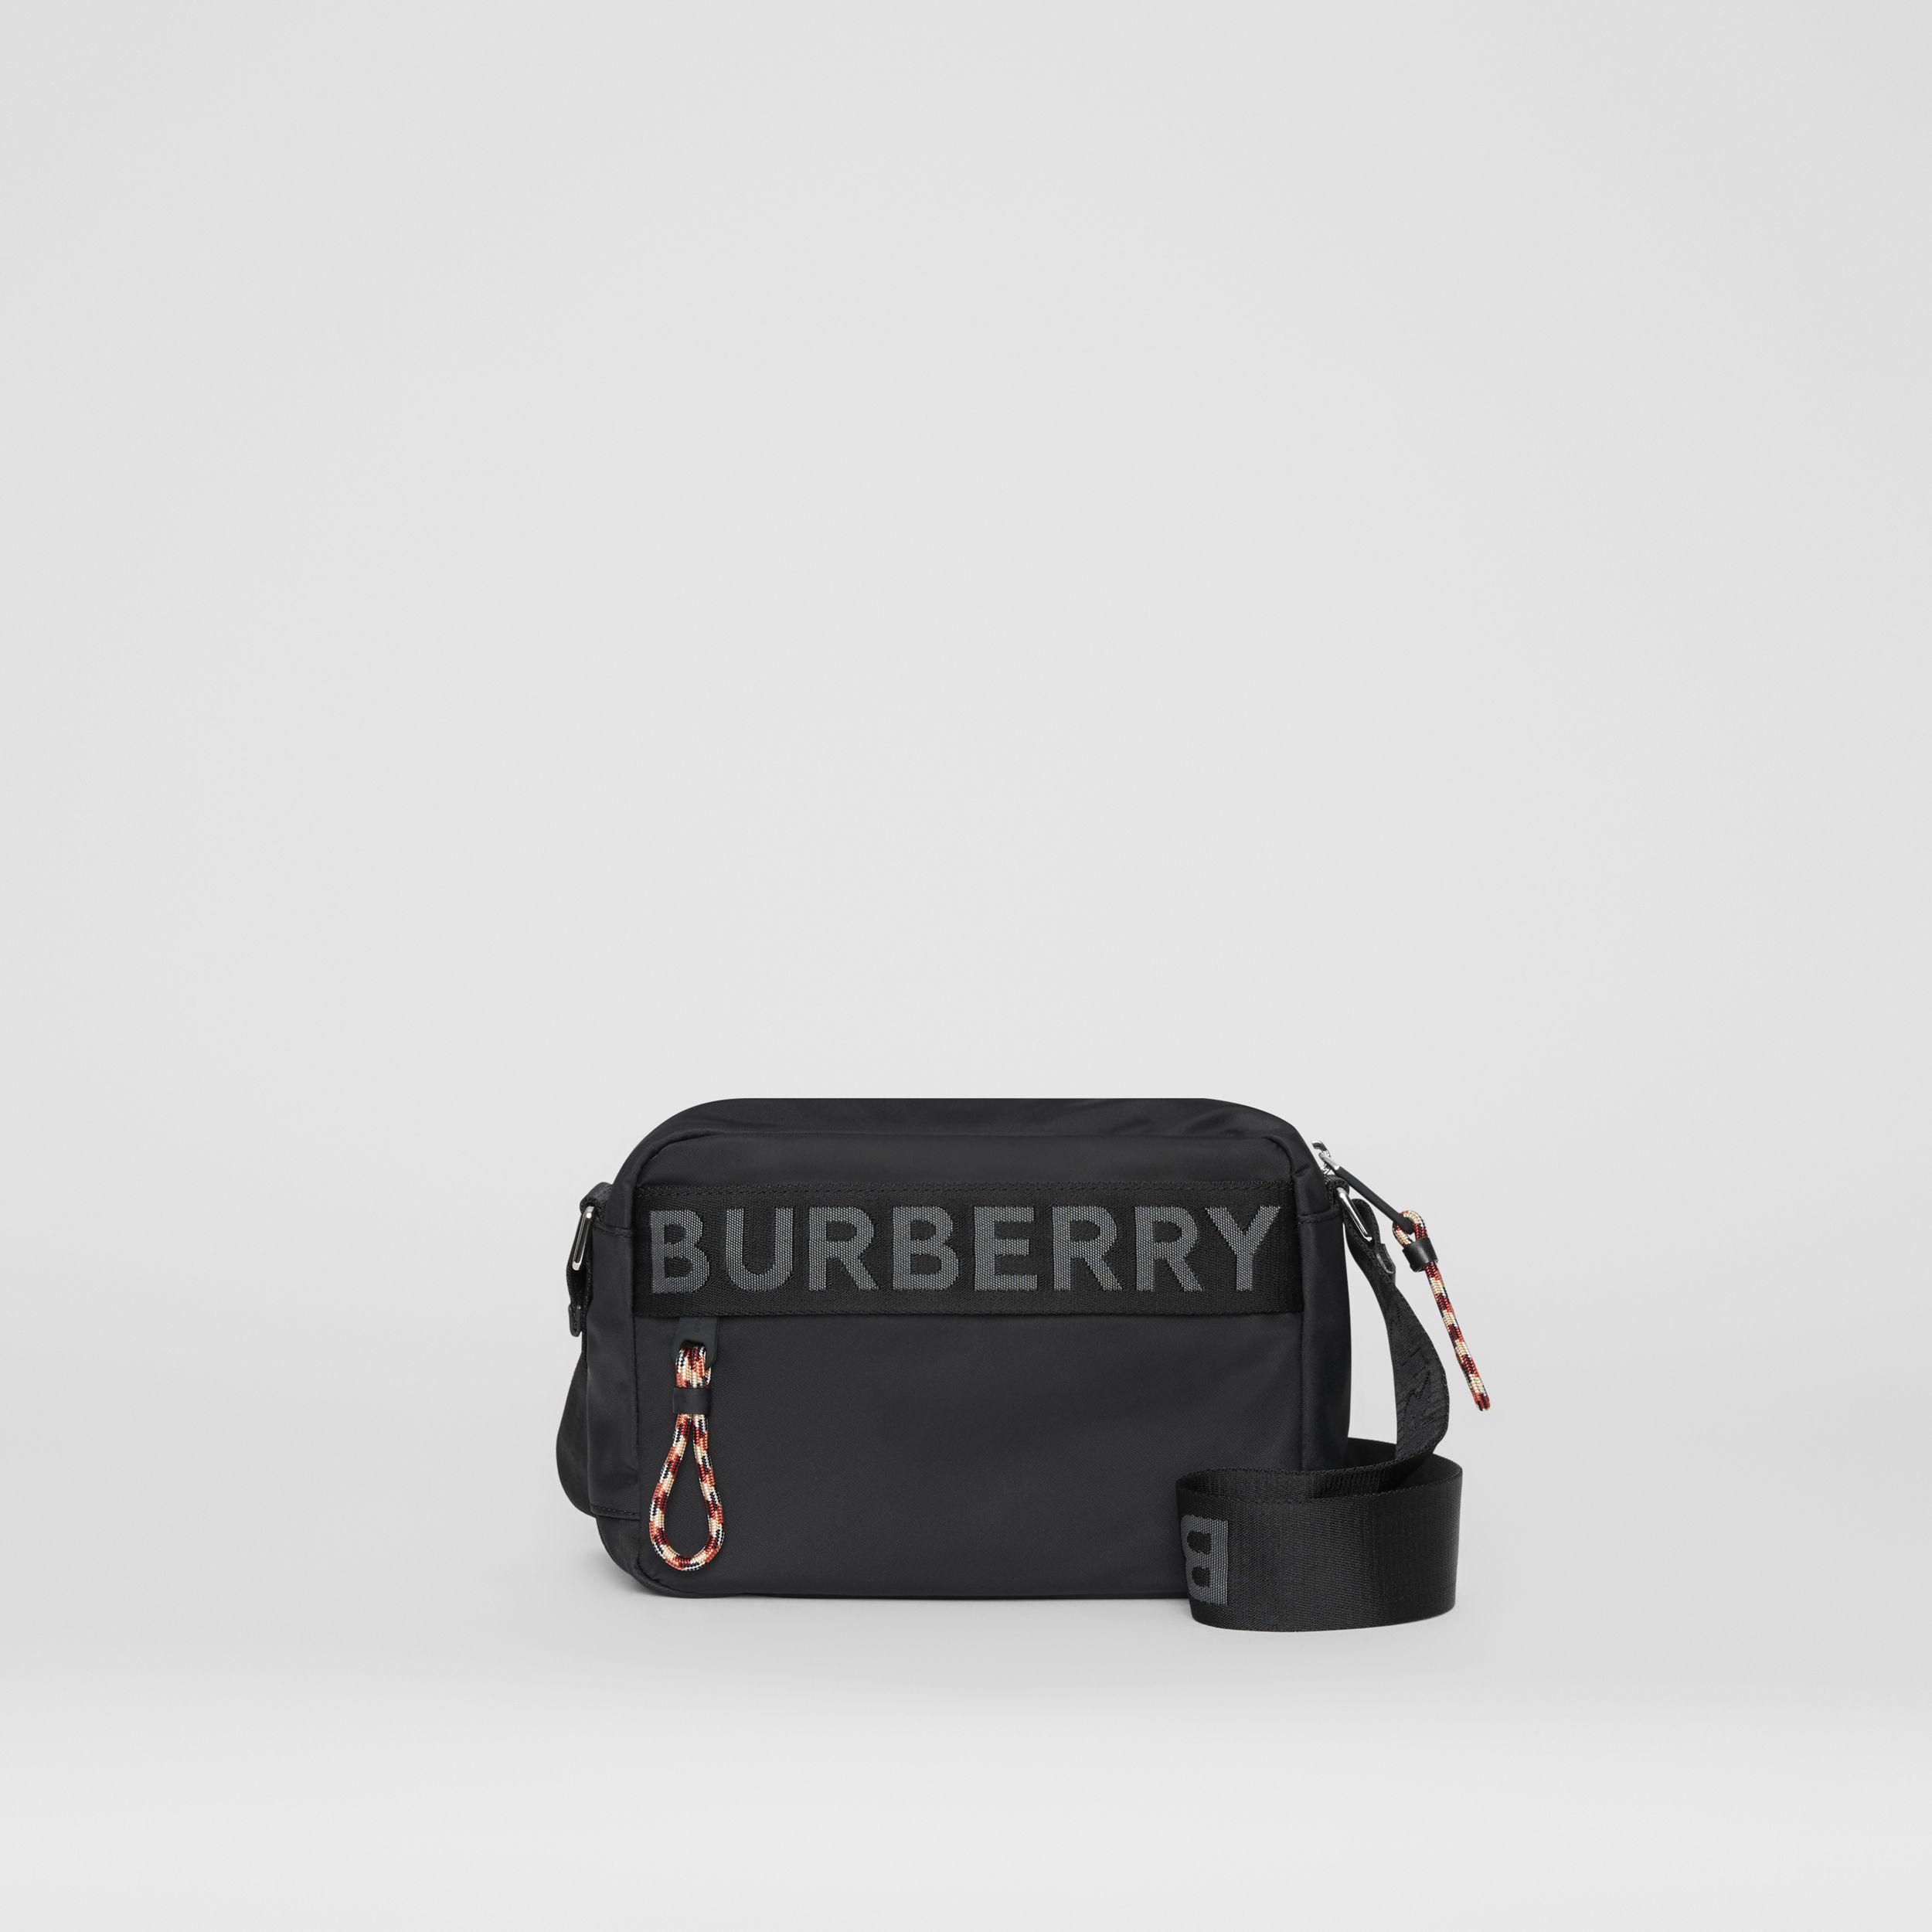 Burberry Men Black Nylon Leather Messenger Briefcase Crossbody